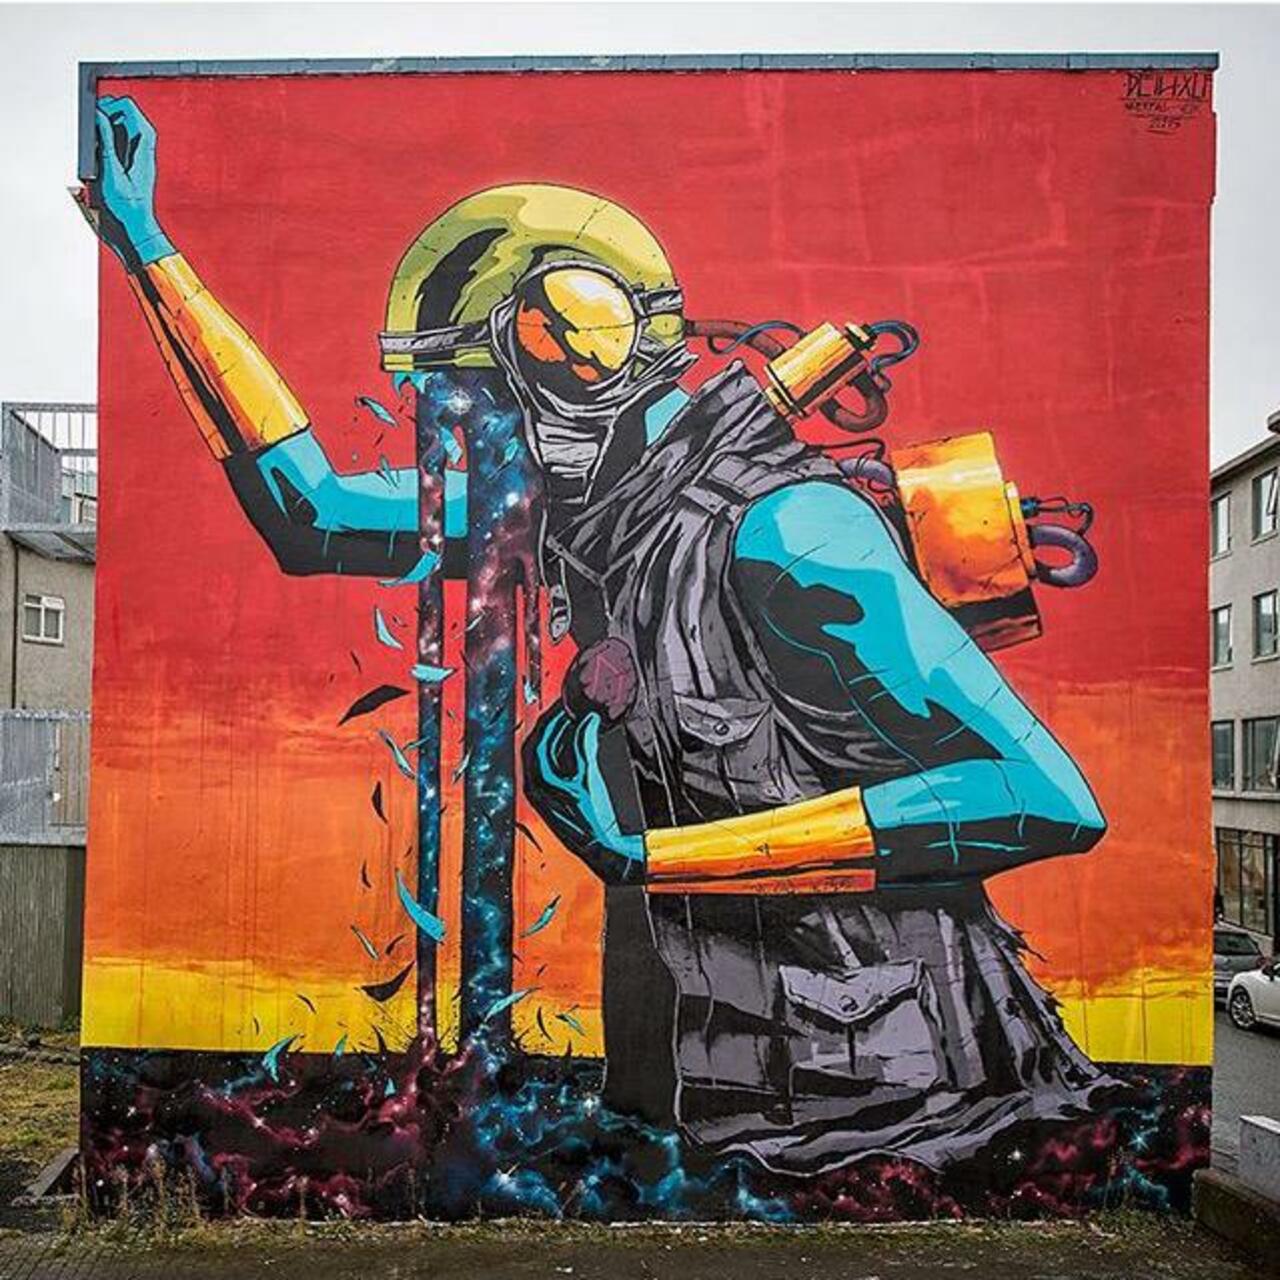 RT belilac "RT belilac "Street Art by Deih in Reykjavik 

#art #graffiti #mural #streetart https://t.co/FuDS40qc0T""